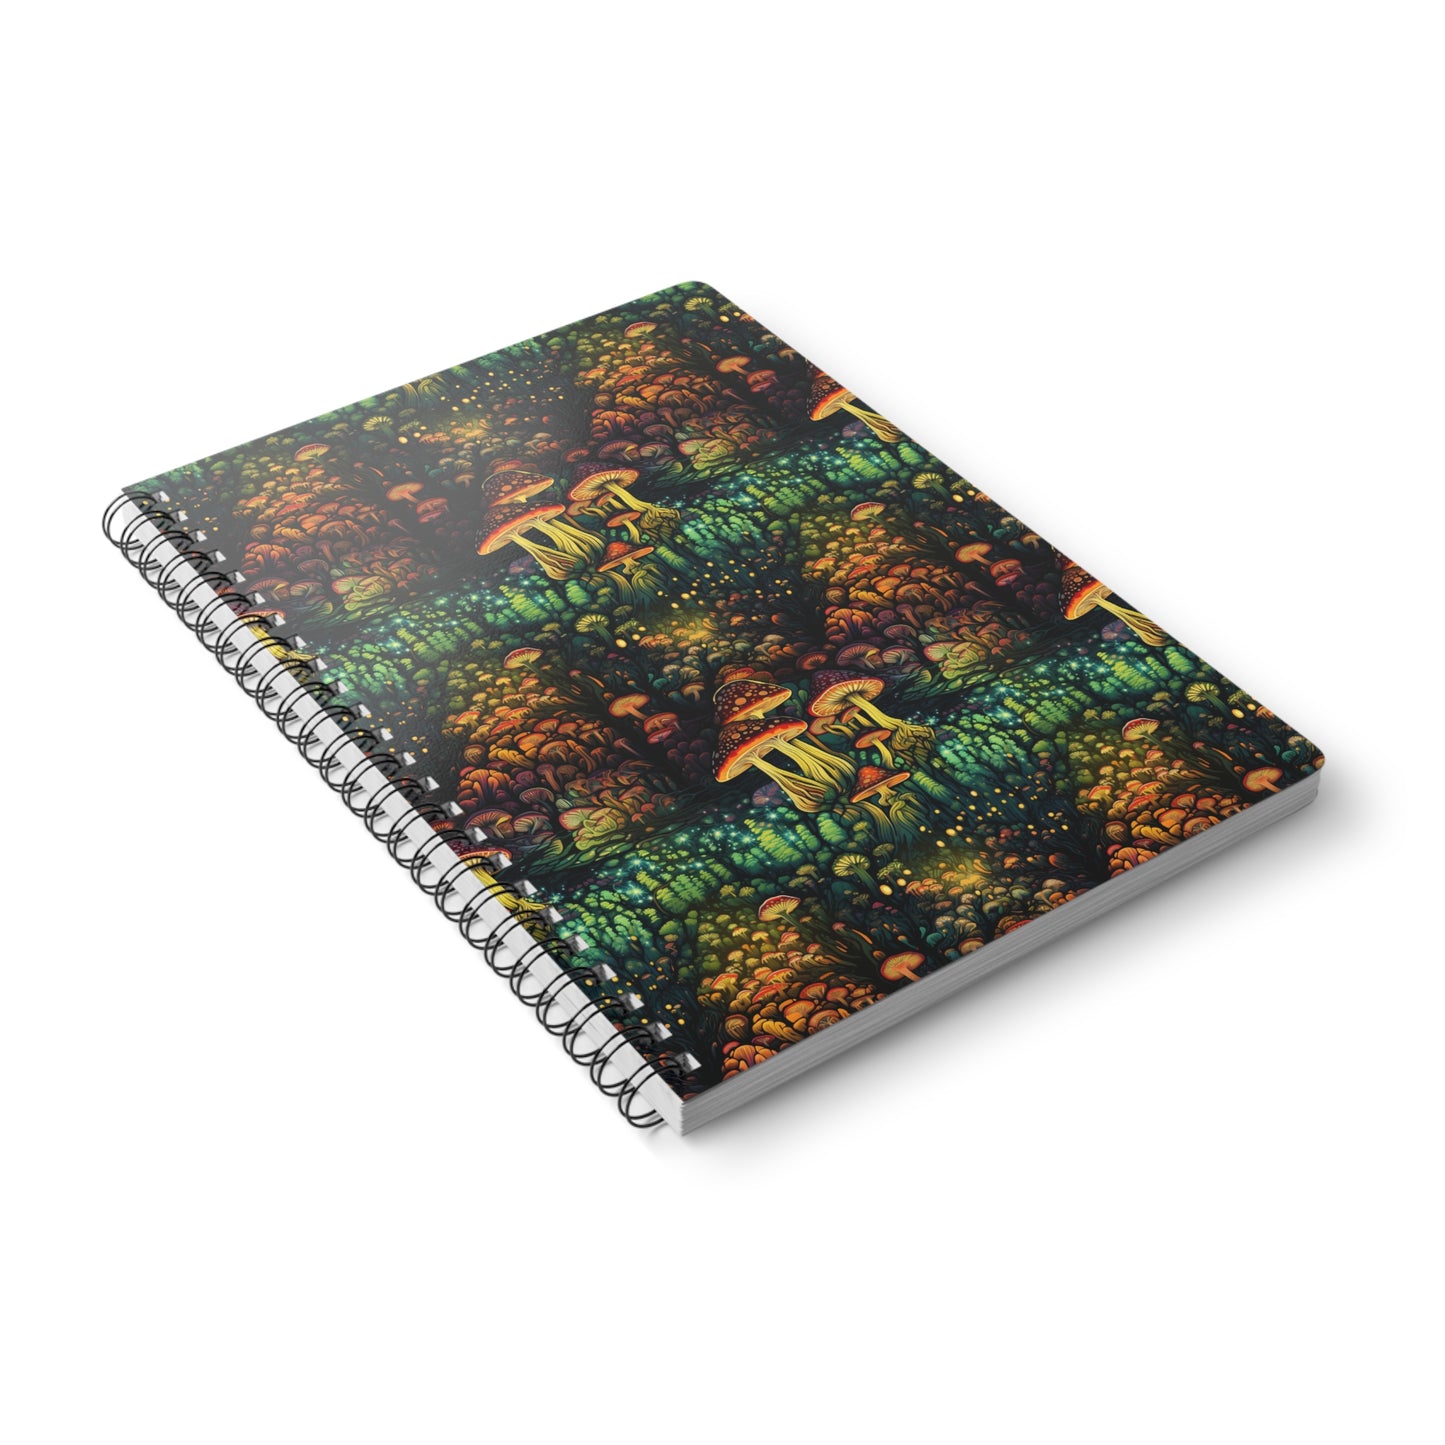 Neon Hallucinations: An Illuminated Autumn Spectacle - Notebook (A5)